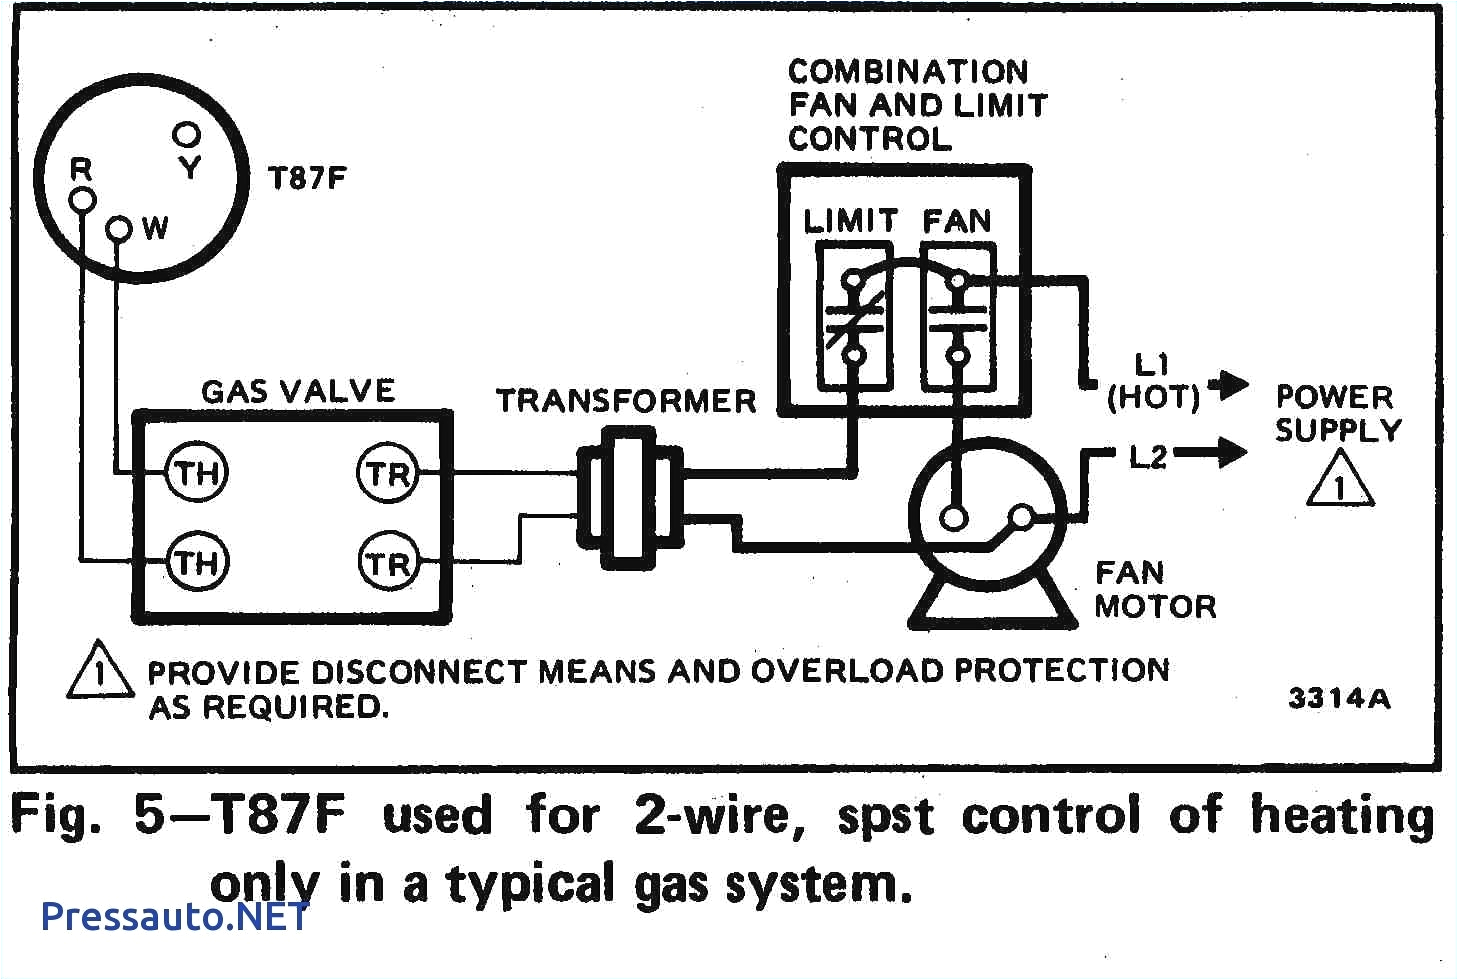 modine unit heater wiring diagram modine gas heater wiring diagram beautiful modine wiring diagram portable space heater wirning brilliant gas 13q jpg